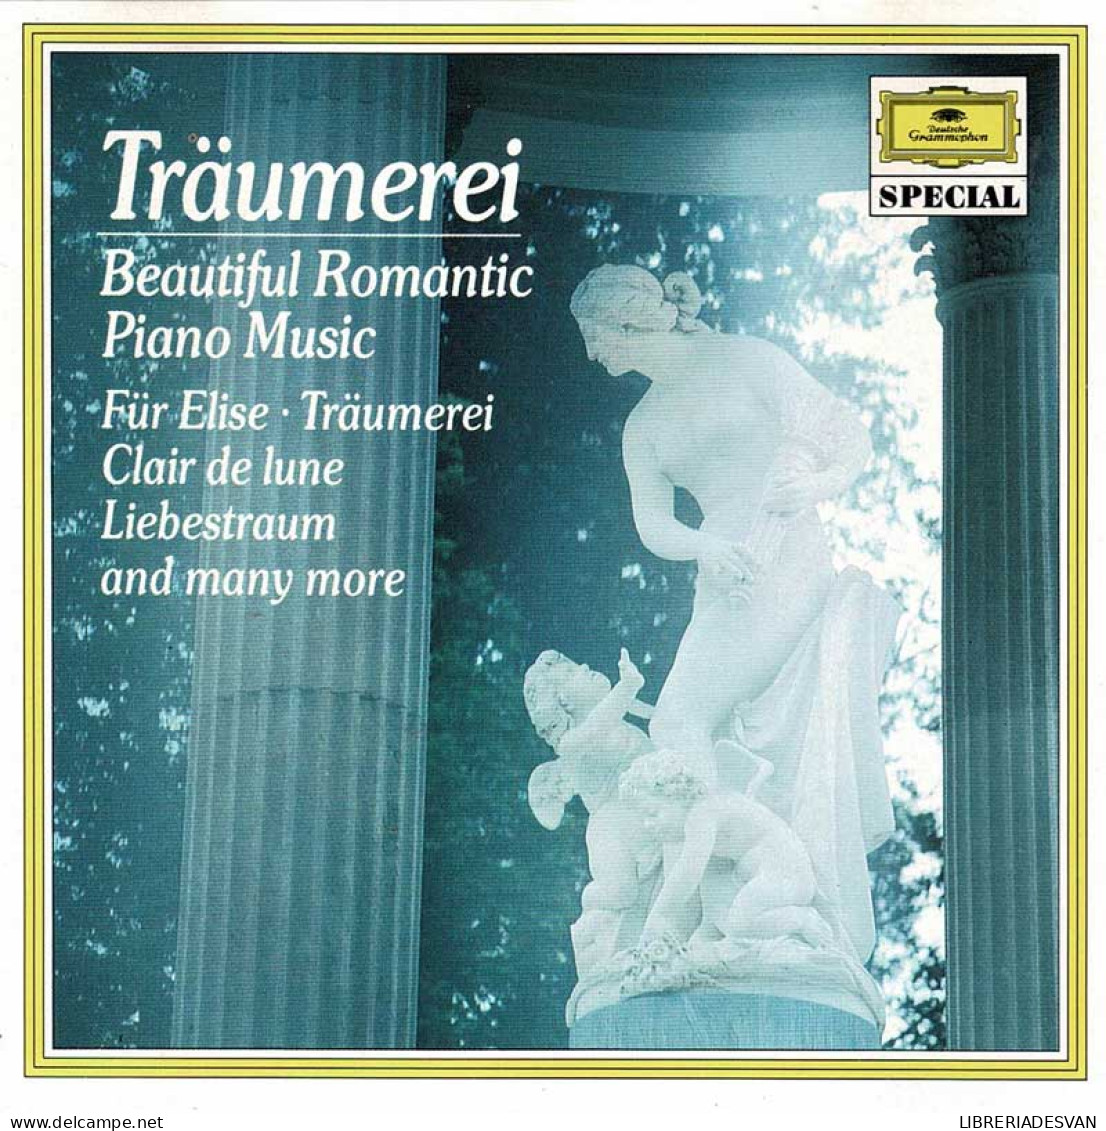 Träumerei. Beautiful Romantic Piano Music. CD - Klassik